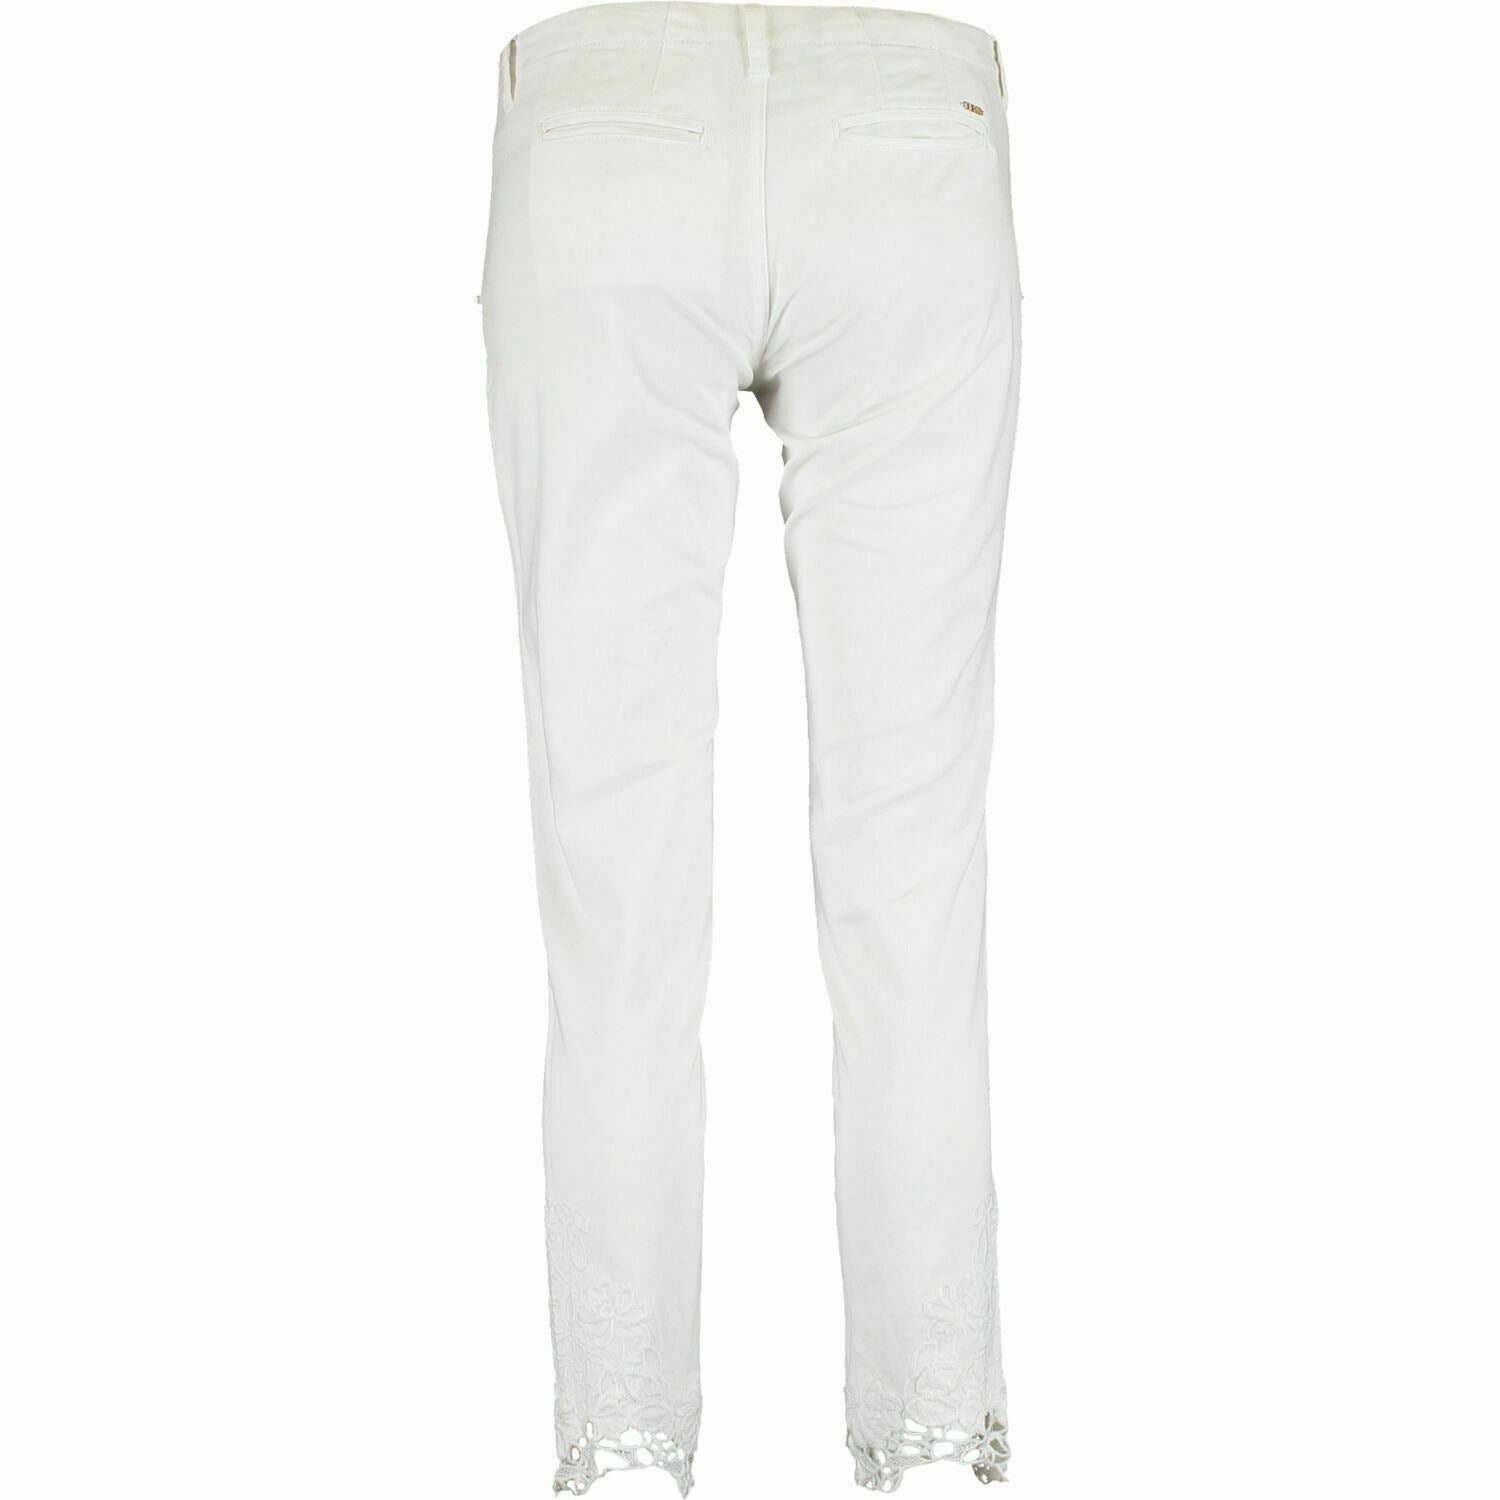 GUESS Womenâs Lace Hem Trousers Pants, White, size W28